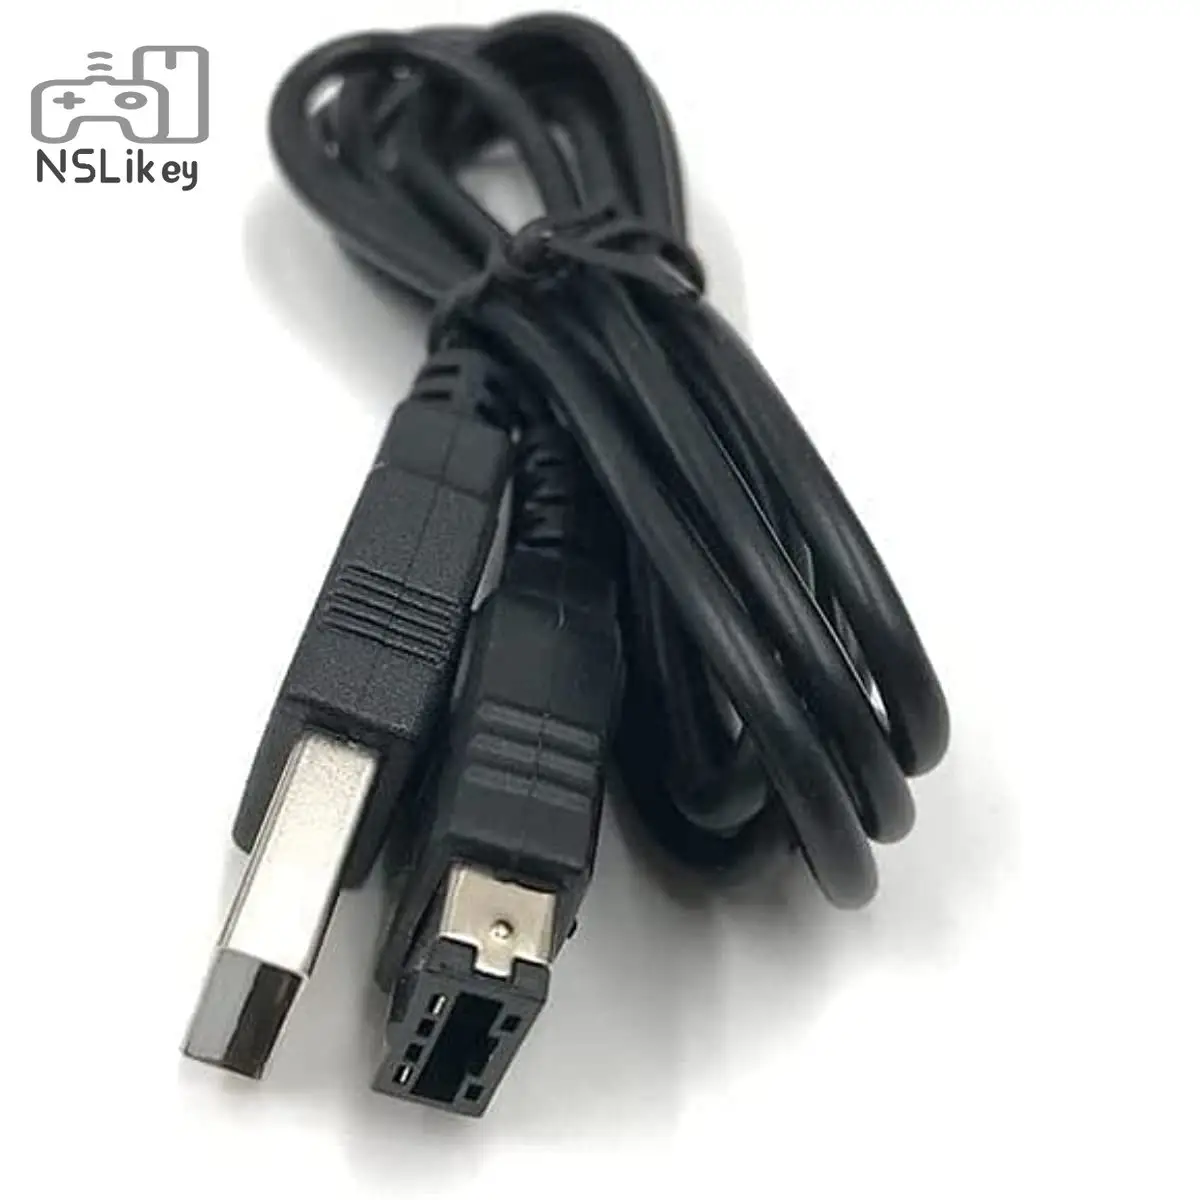 NSLikey 1.2m USB şarj aleti kablosu Nintendo DS NDS Gameboy Advance GBA SP USB şarj aleti kurşun şarj kablosu